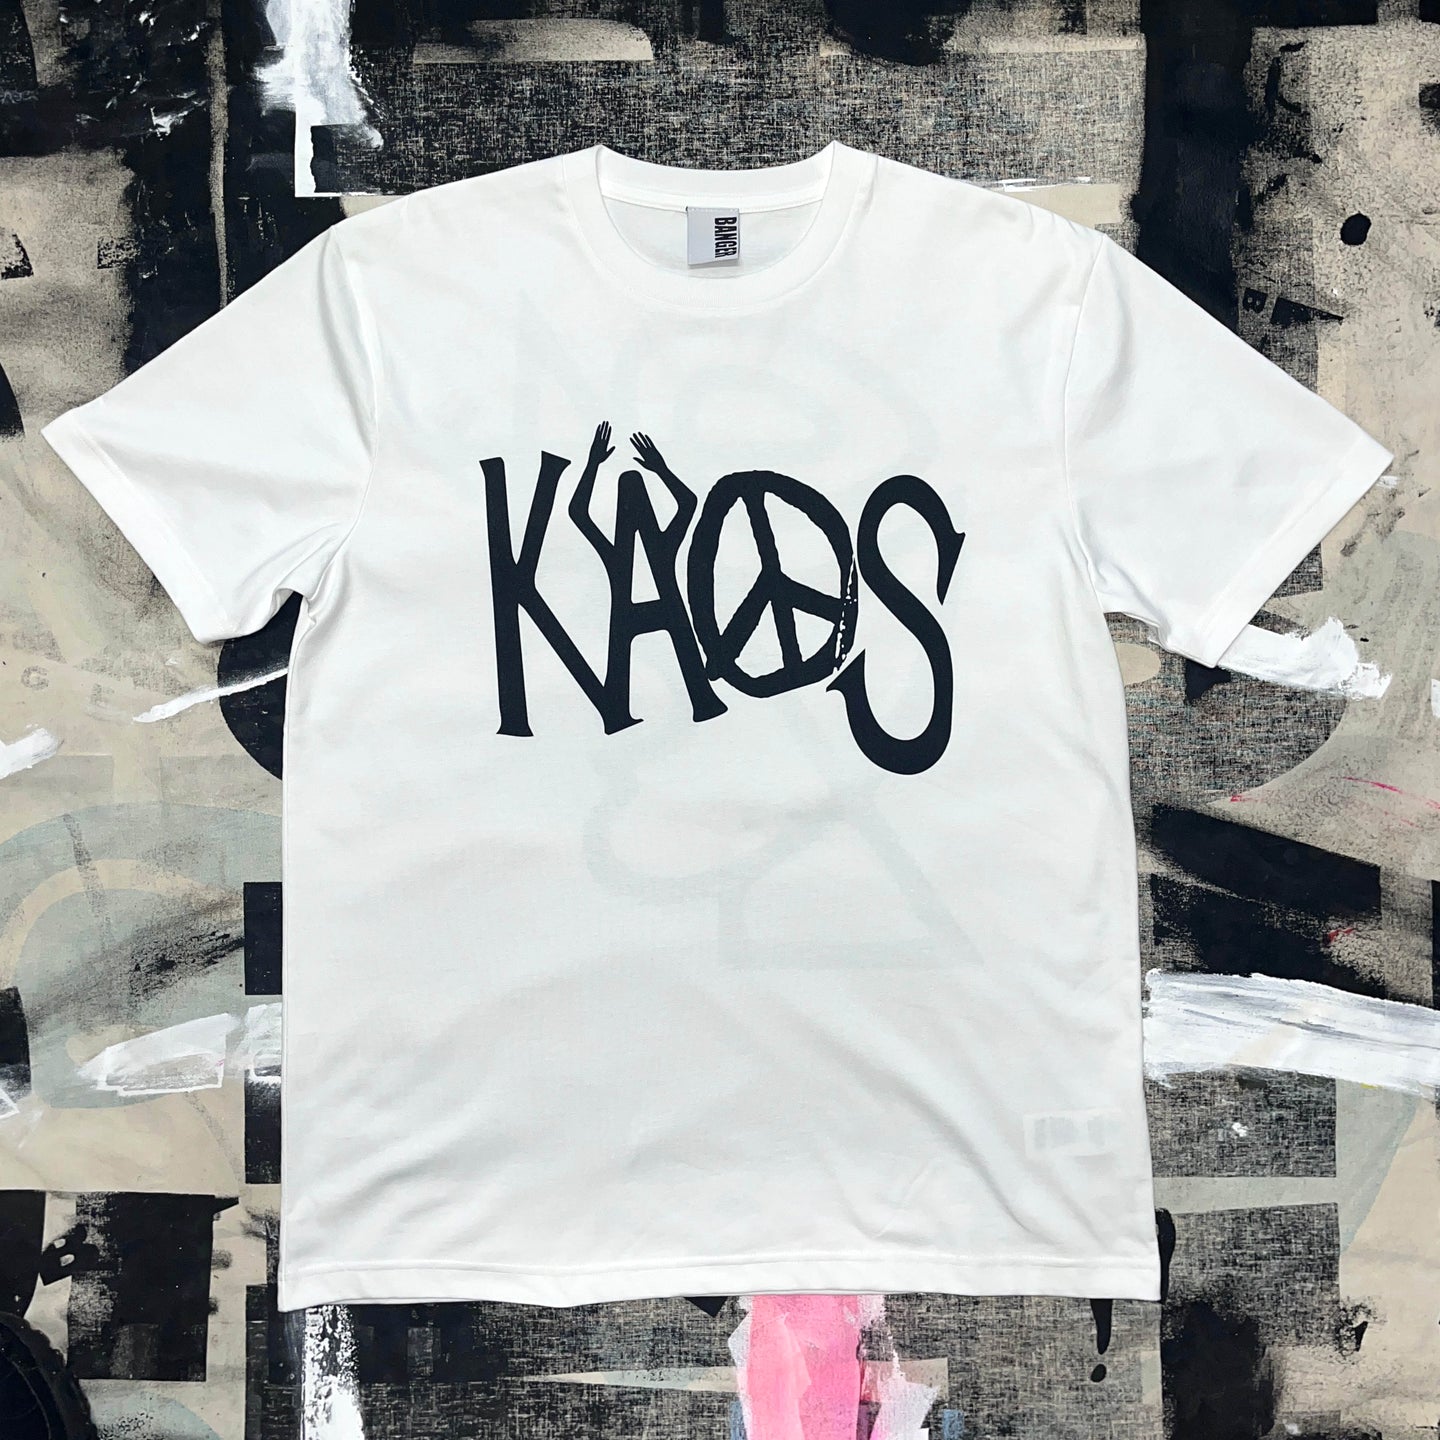 KAOS white T-shirt